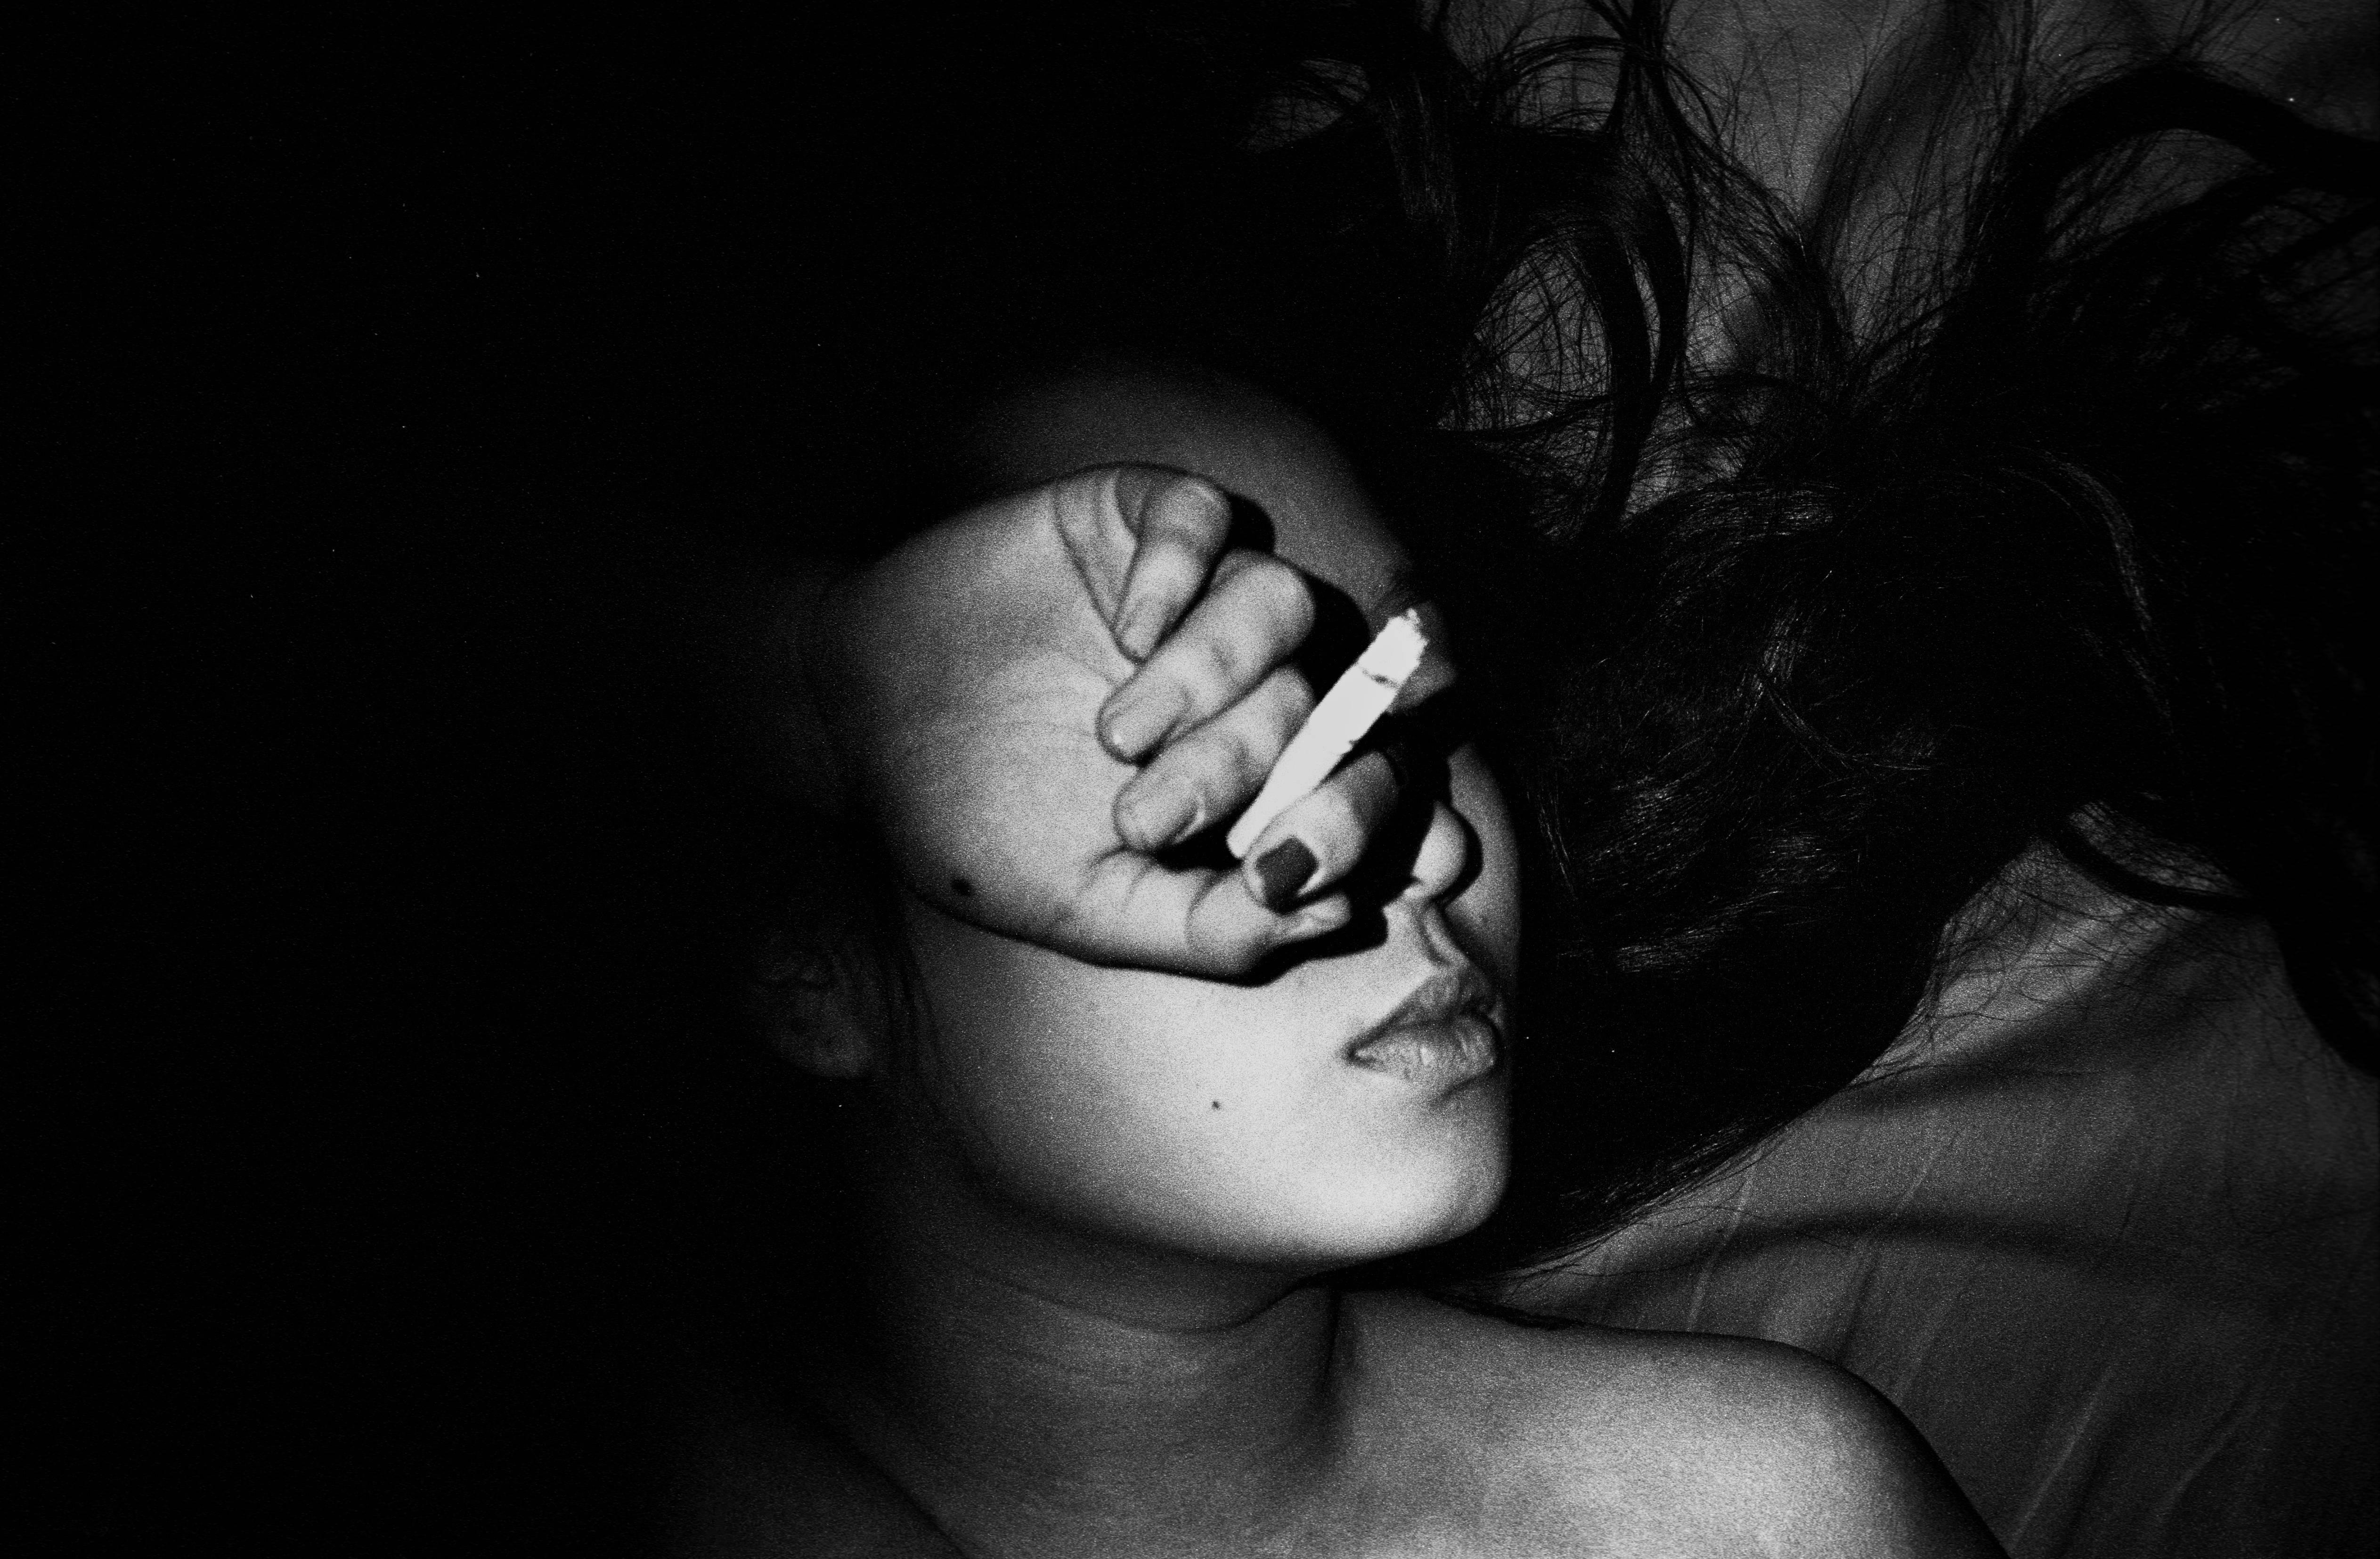 Michael Grieve Black and White Photograph - The Foreigner [Sic}, Cigarette, Paris